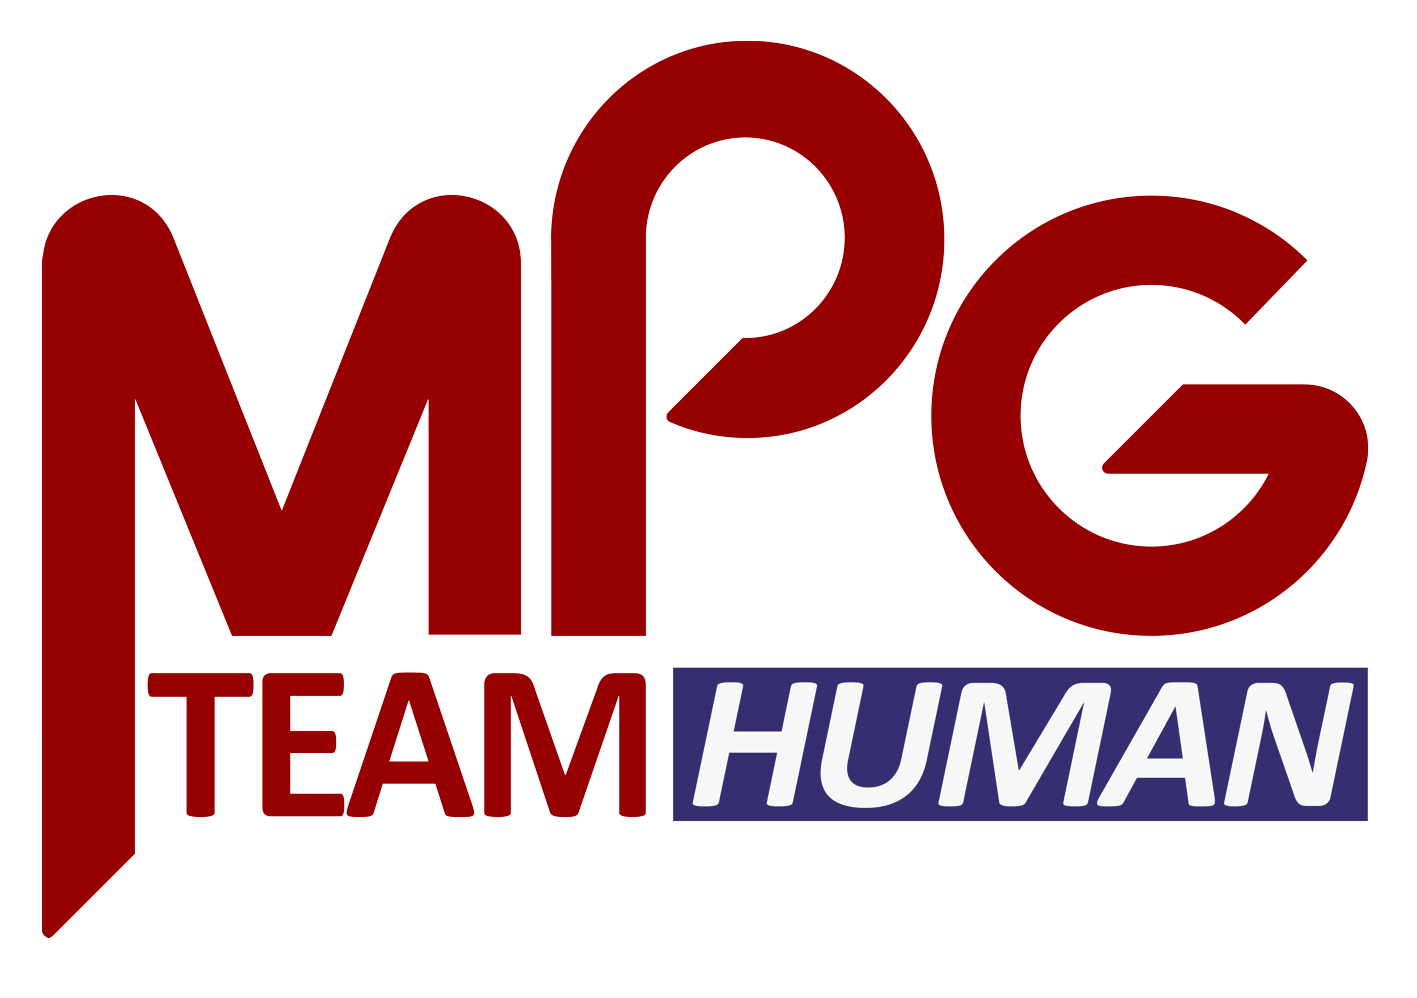 Team Human: "Sowohl als auch"